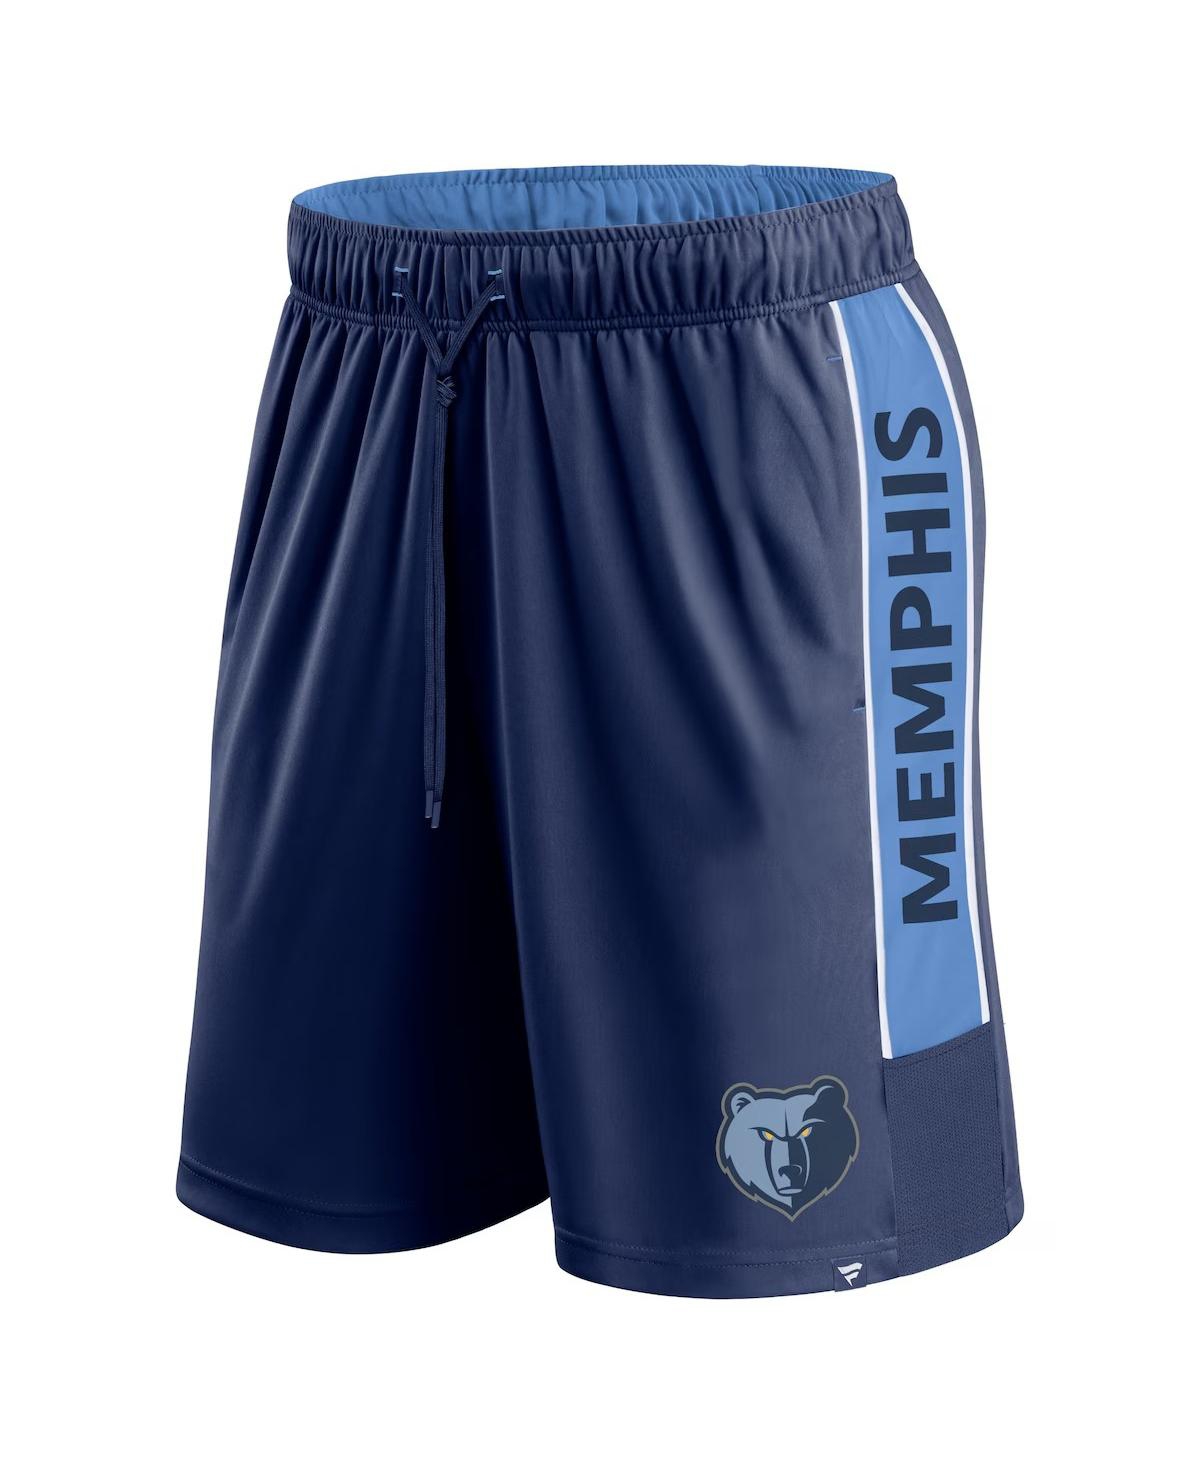 Shop Fanatics Men's Navy Memphis Grizzlies Game Winner Defender Shorts